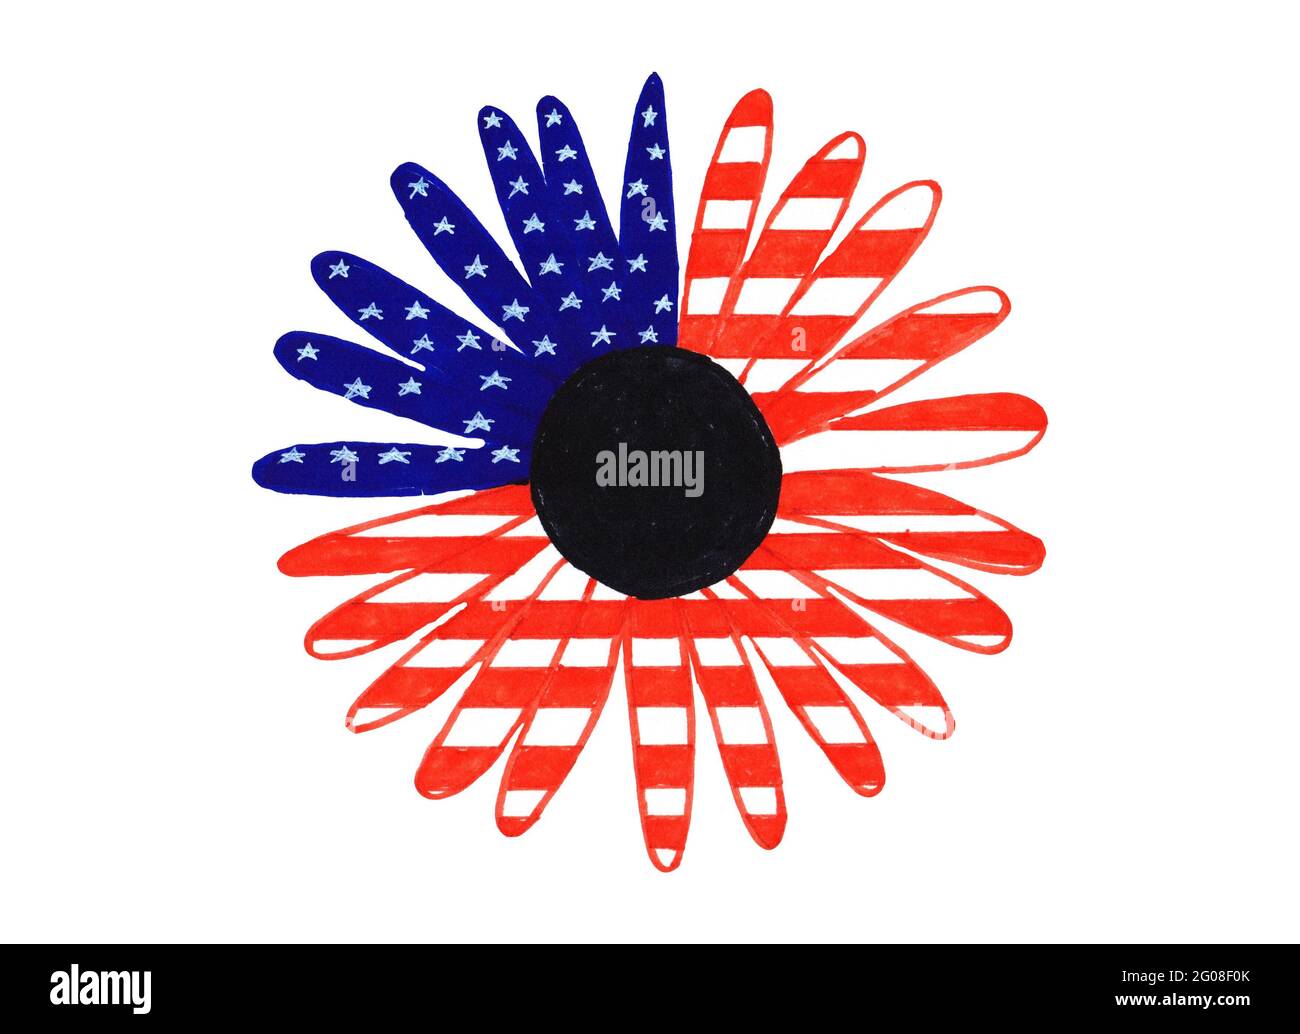 Daisy American flag marker drawing illustration Stock Photo